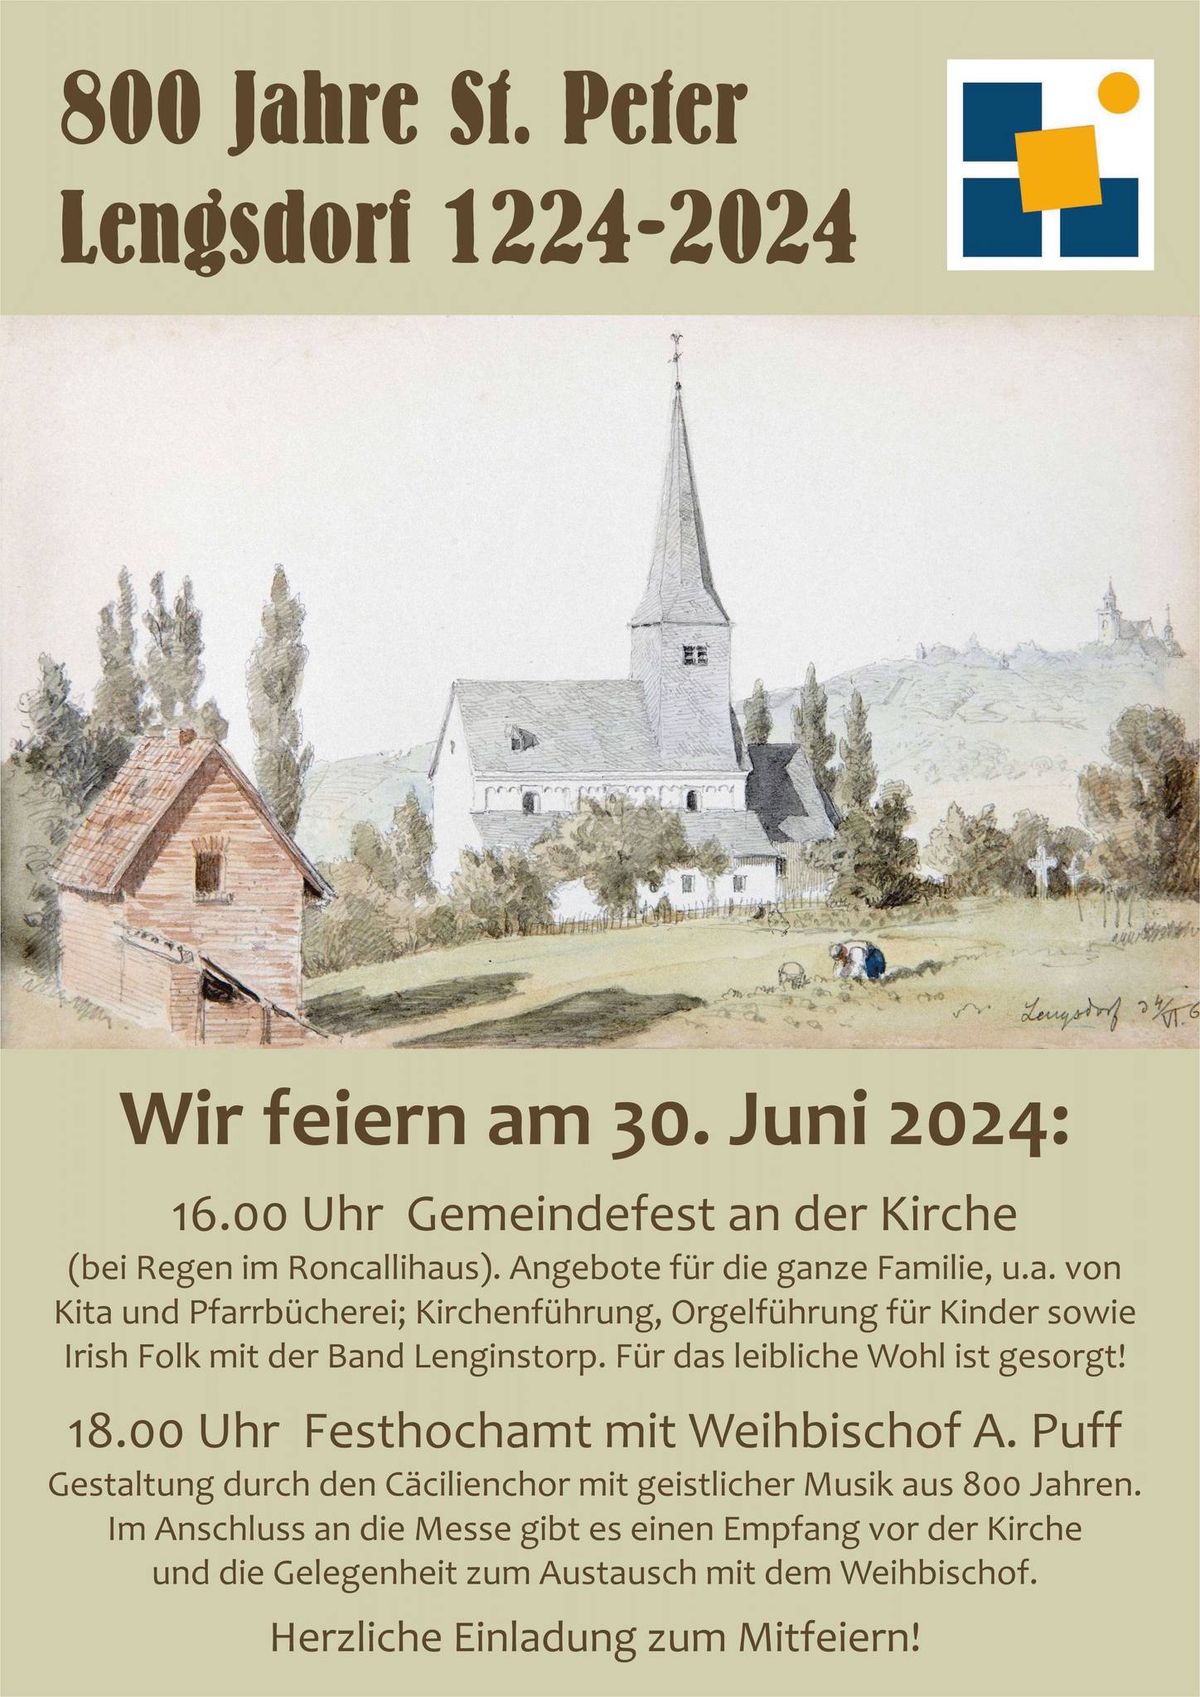 800 Jahre Lengsdorf St.Peter